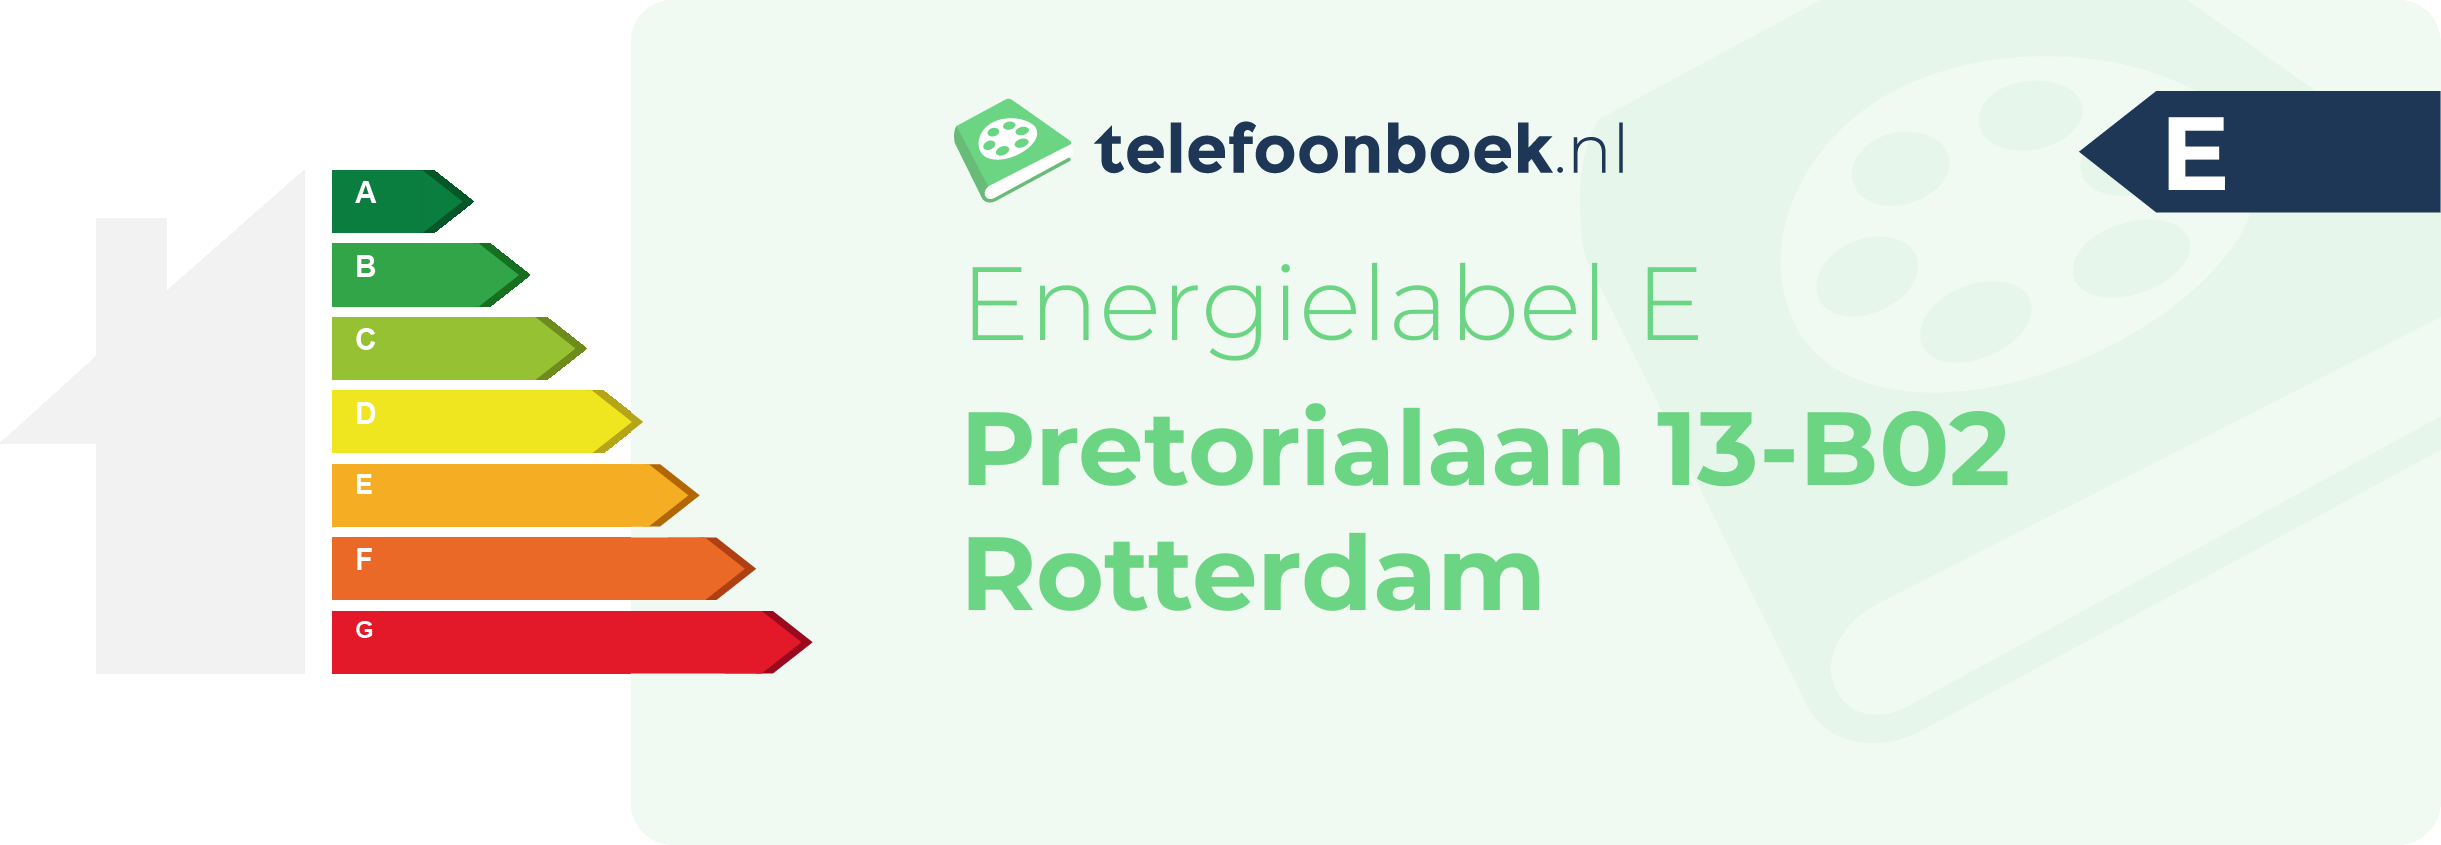 Energielabel Pretorialaan 13-B02 Rotterdam